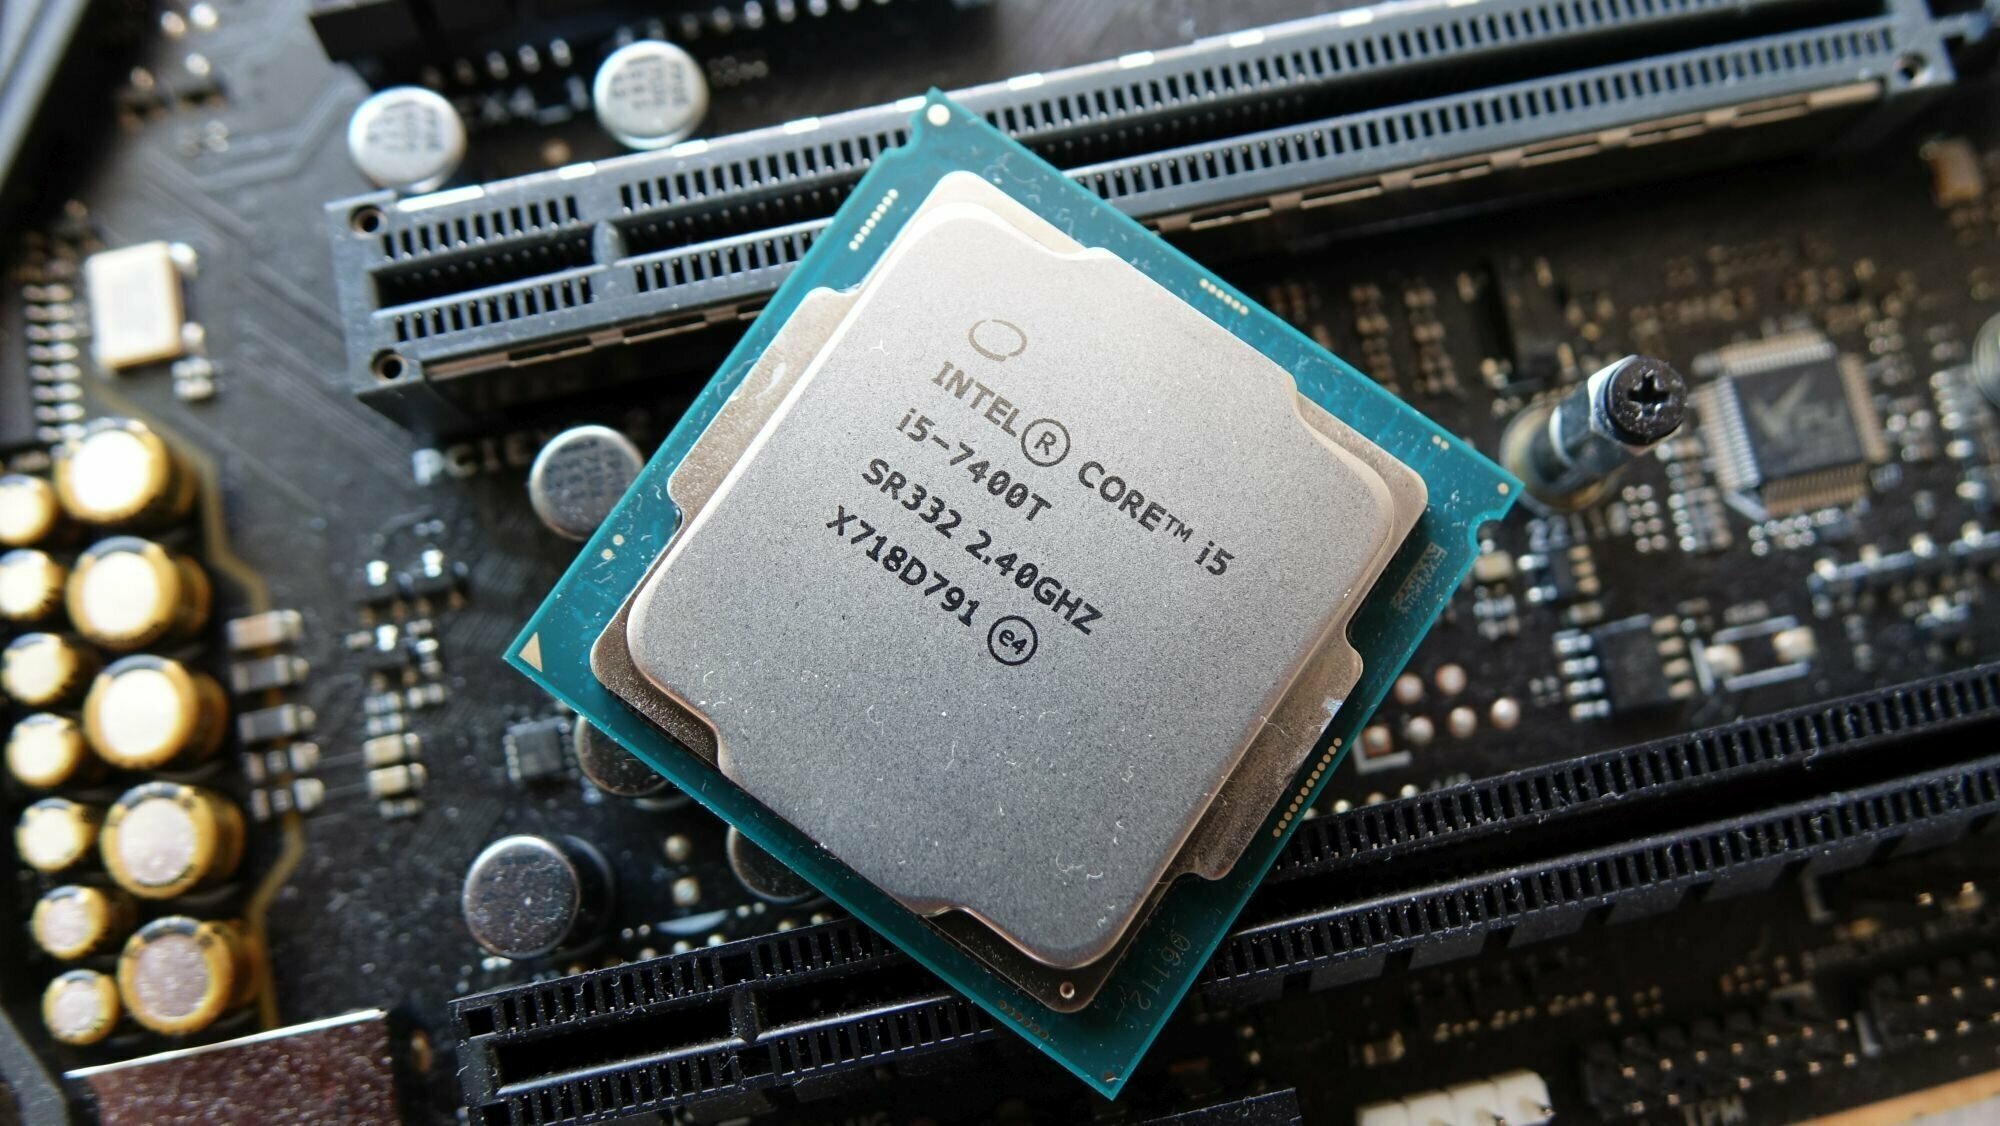 Процессор Intel Core i5-7400 LGA1151 4 x 3000 МГц